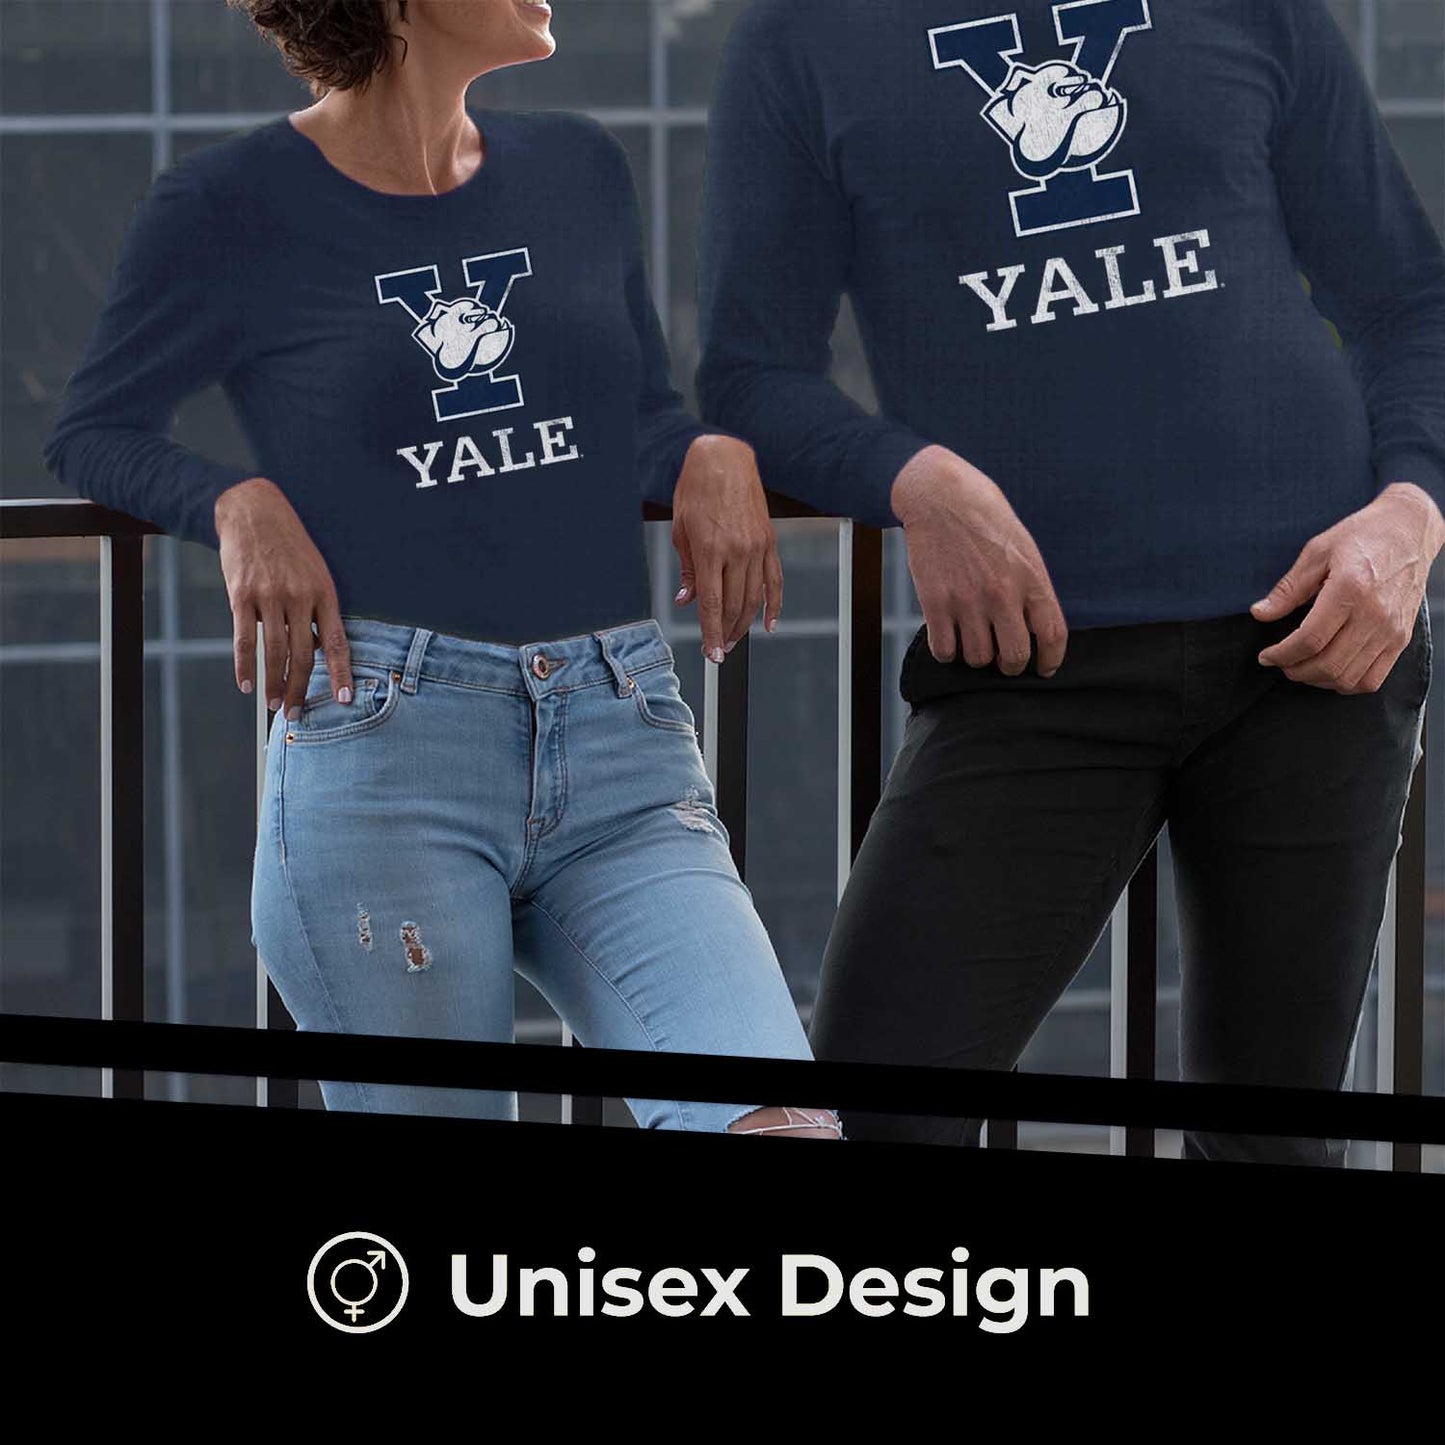 Yale Bulldogs NCAA MVP Adult Long-Sleeve Shirt - Navy